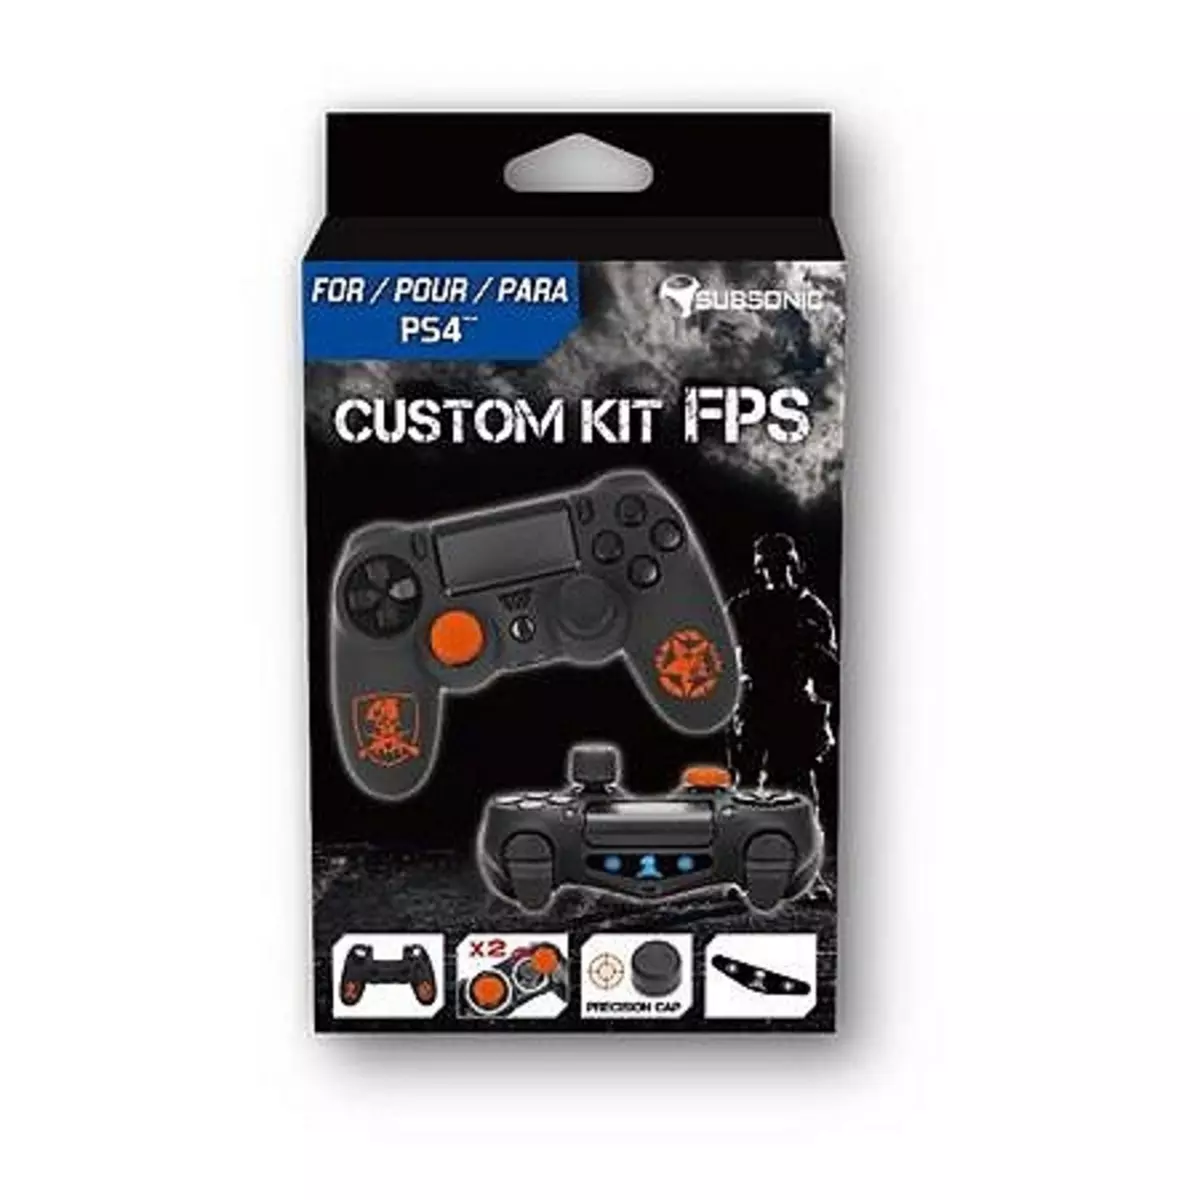 Custom Kit FPS Edition pour manette PS4